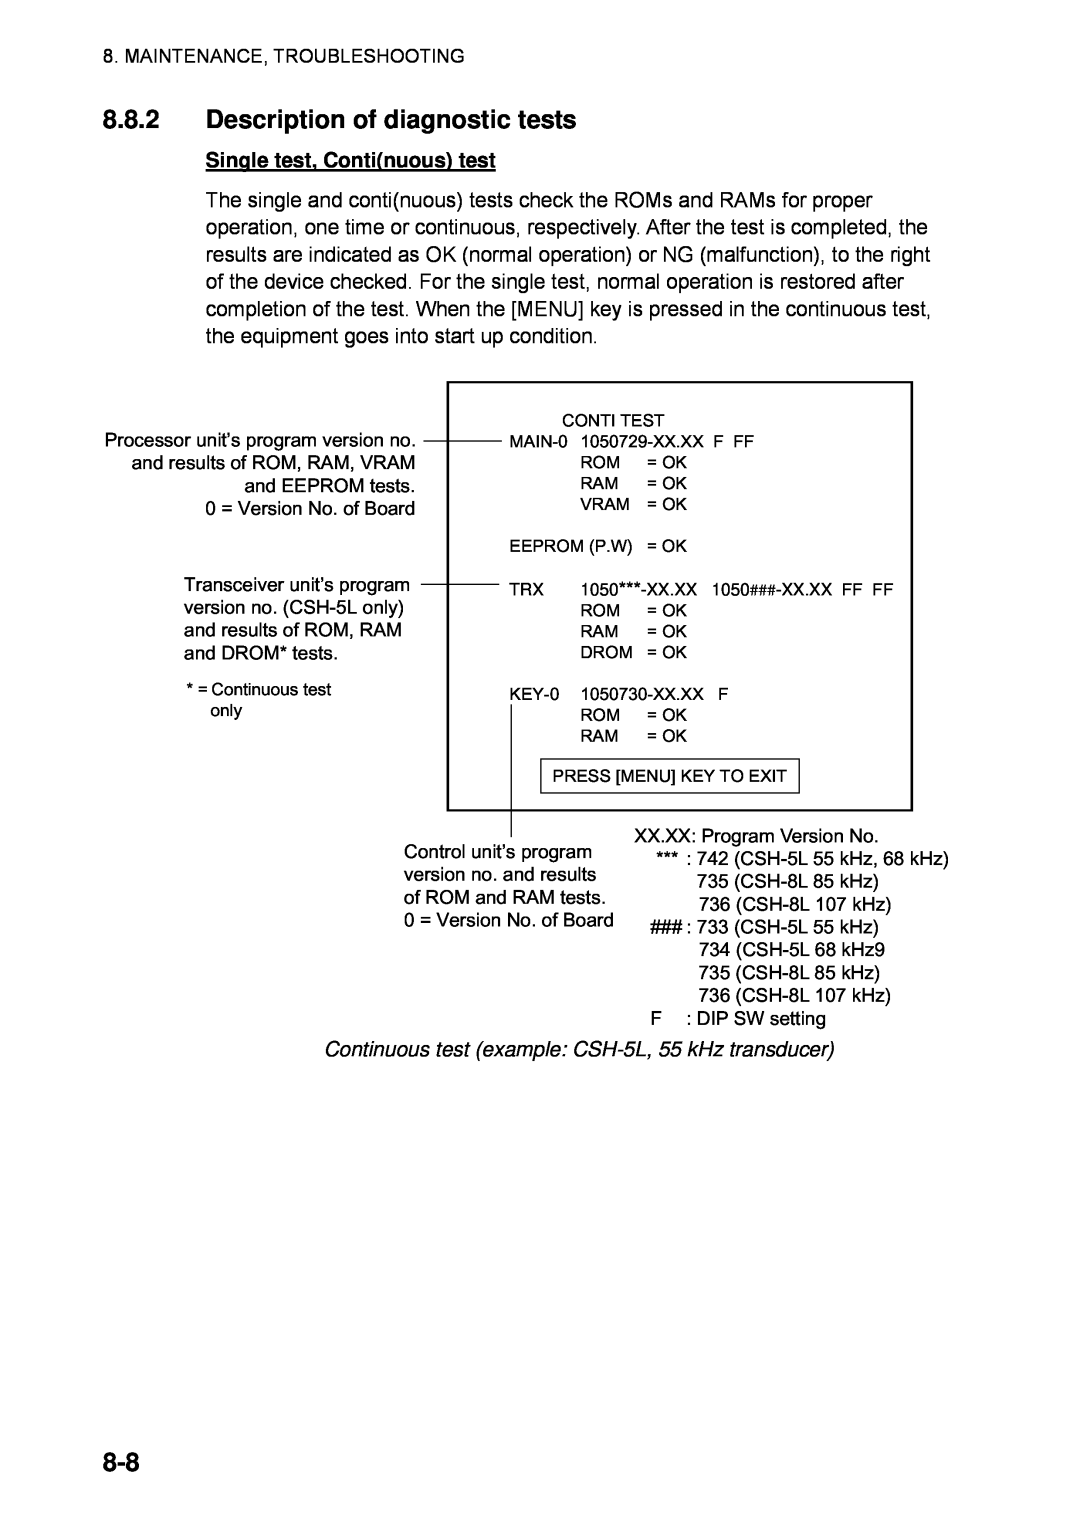 Furuno CSH-5L/CSH-8L manual Description of diagnostic tests, Continuous test example CSH-5L, 55 kHz transducer 